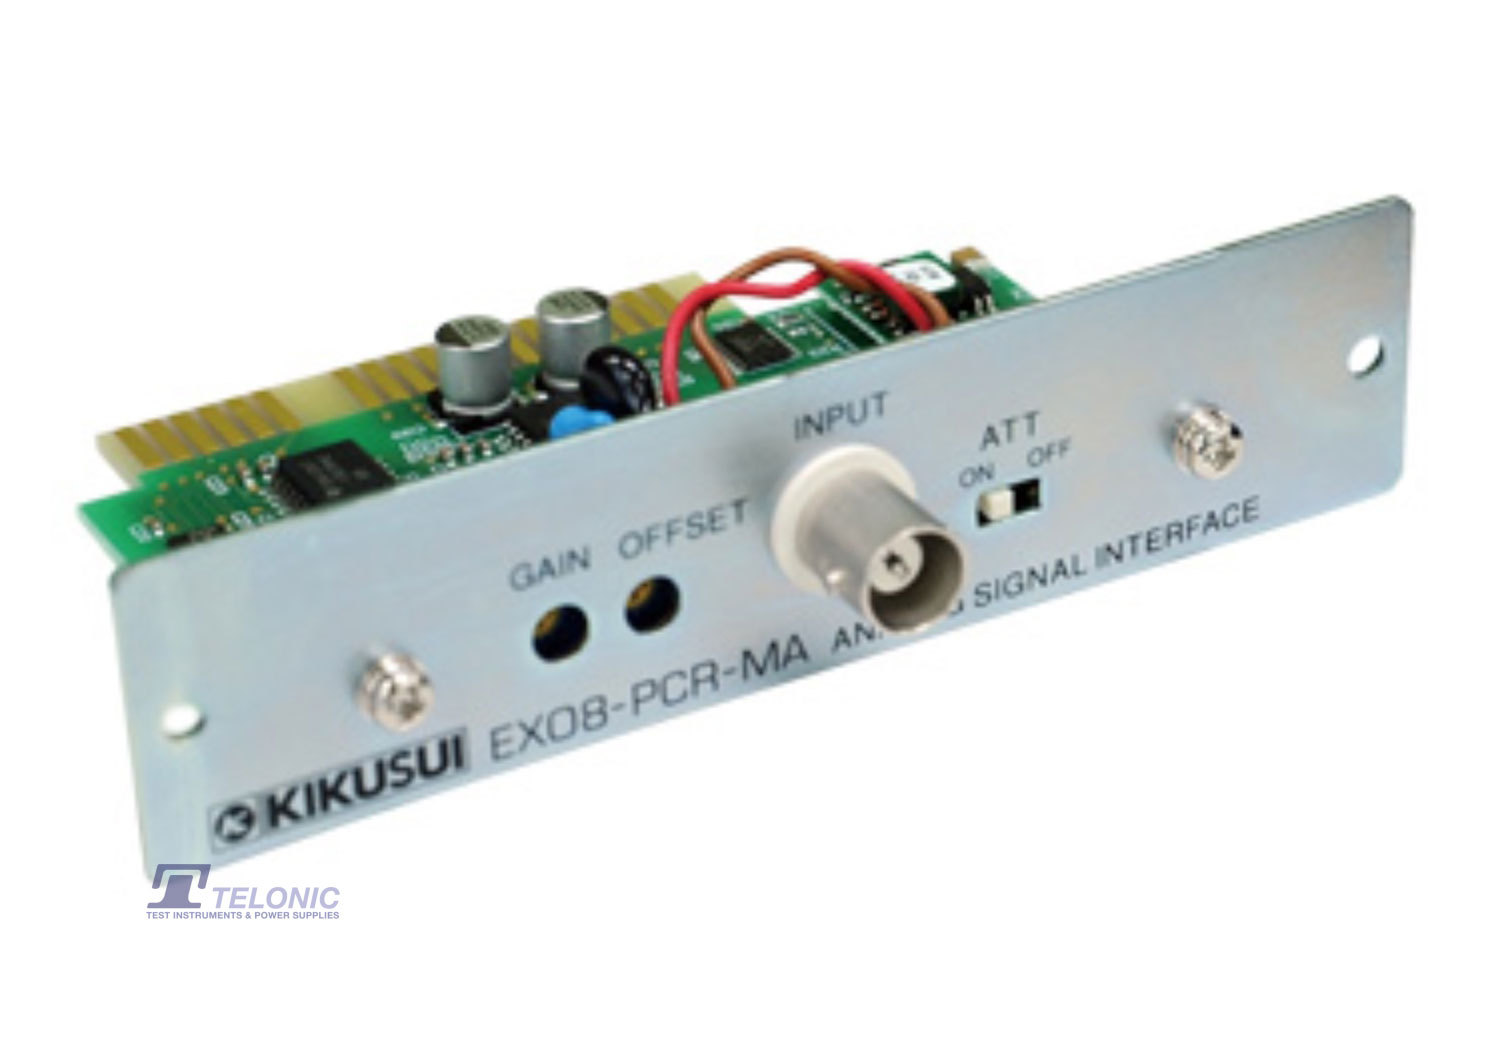 Kikusui EX08-PCR-MA Analogue Interface Board